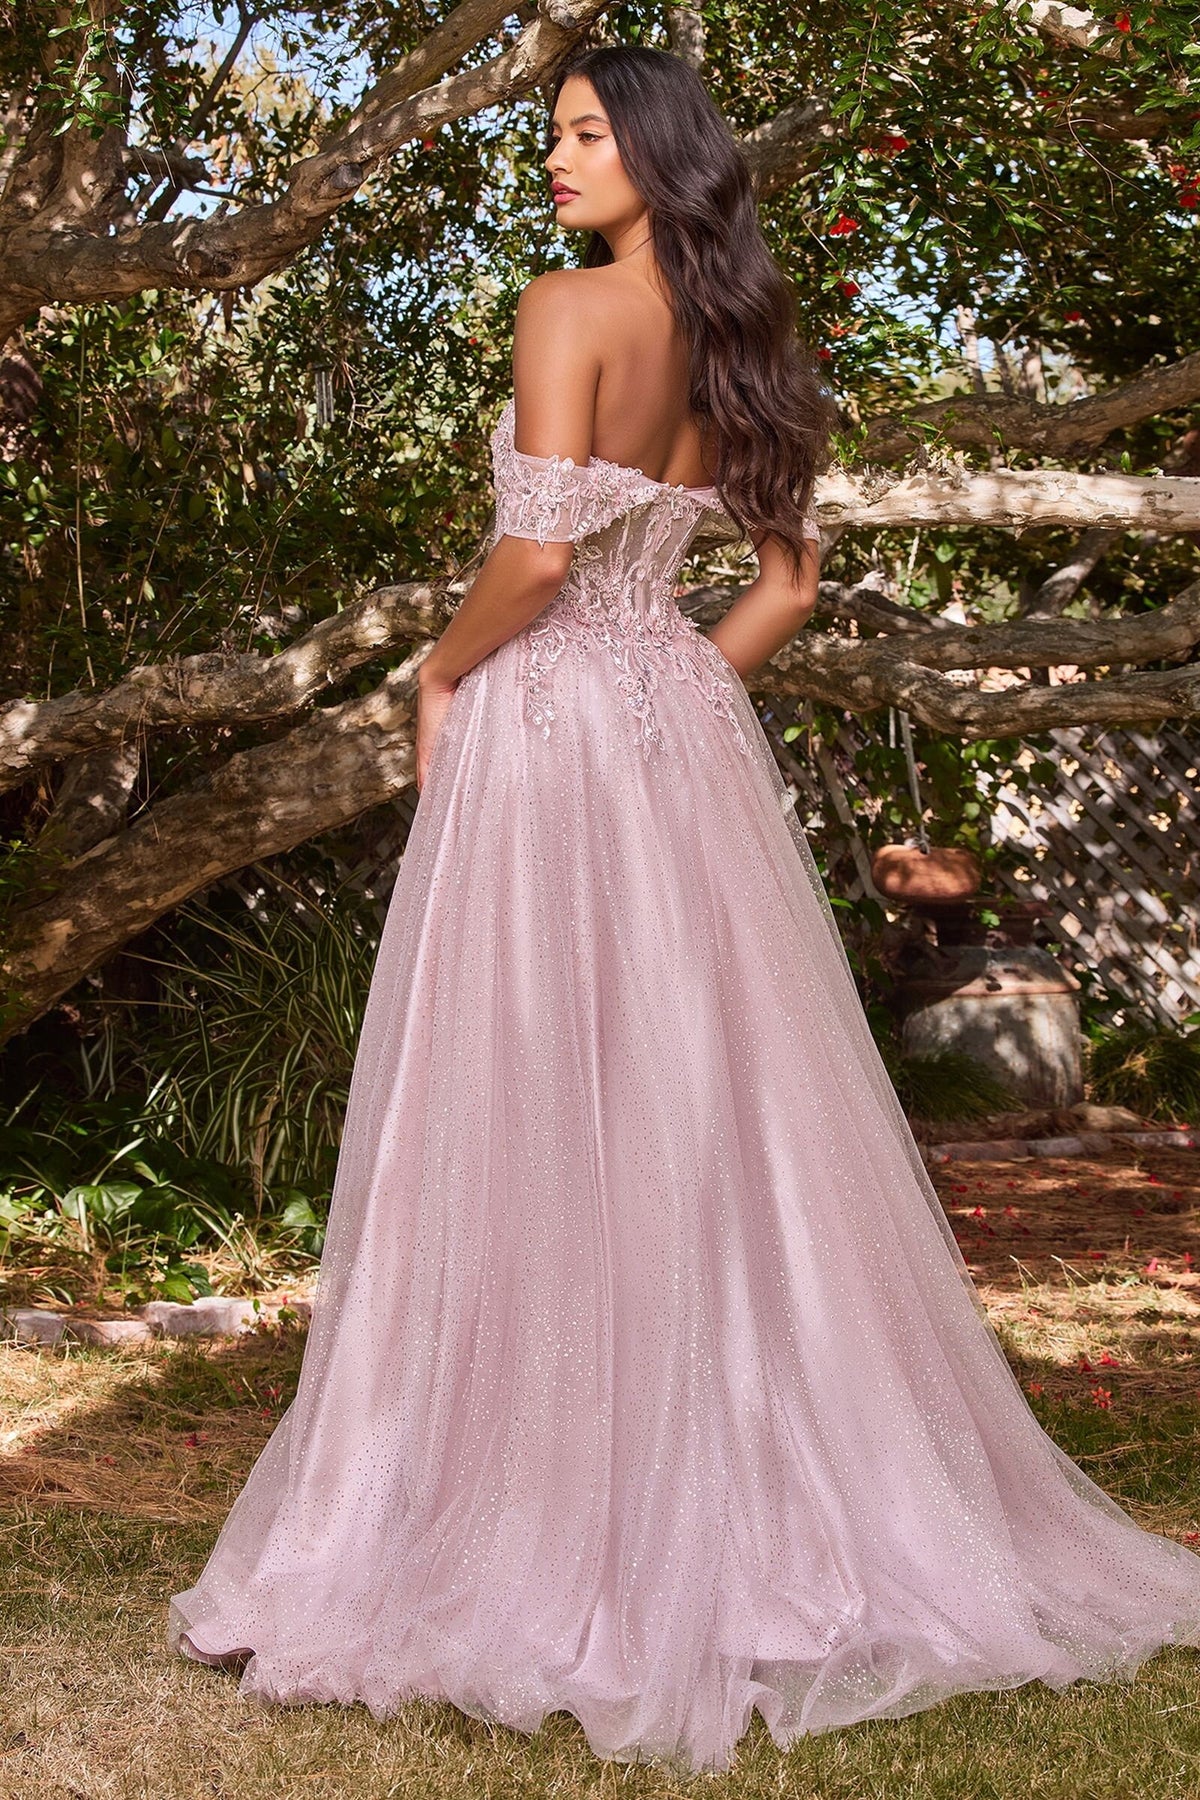 Classic Sweetheart Neckline Off the Shoulder Bustier Wedding Dress Lace Corset Formal Gown Bridal Style Sparkle Skirt Romantic Design Aline